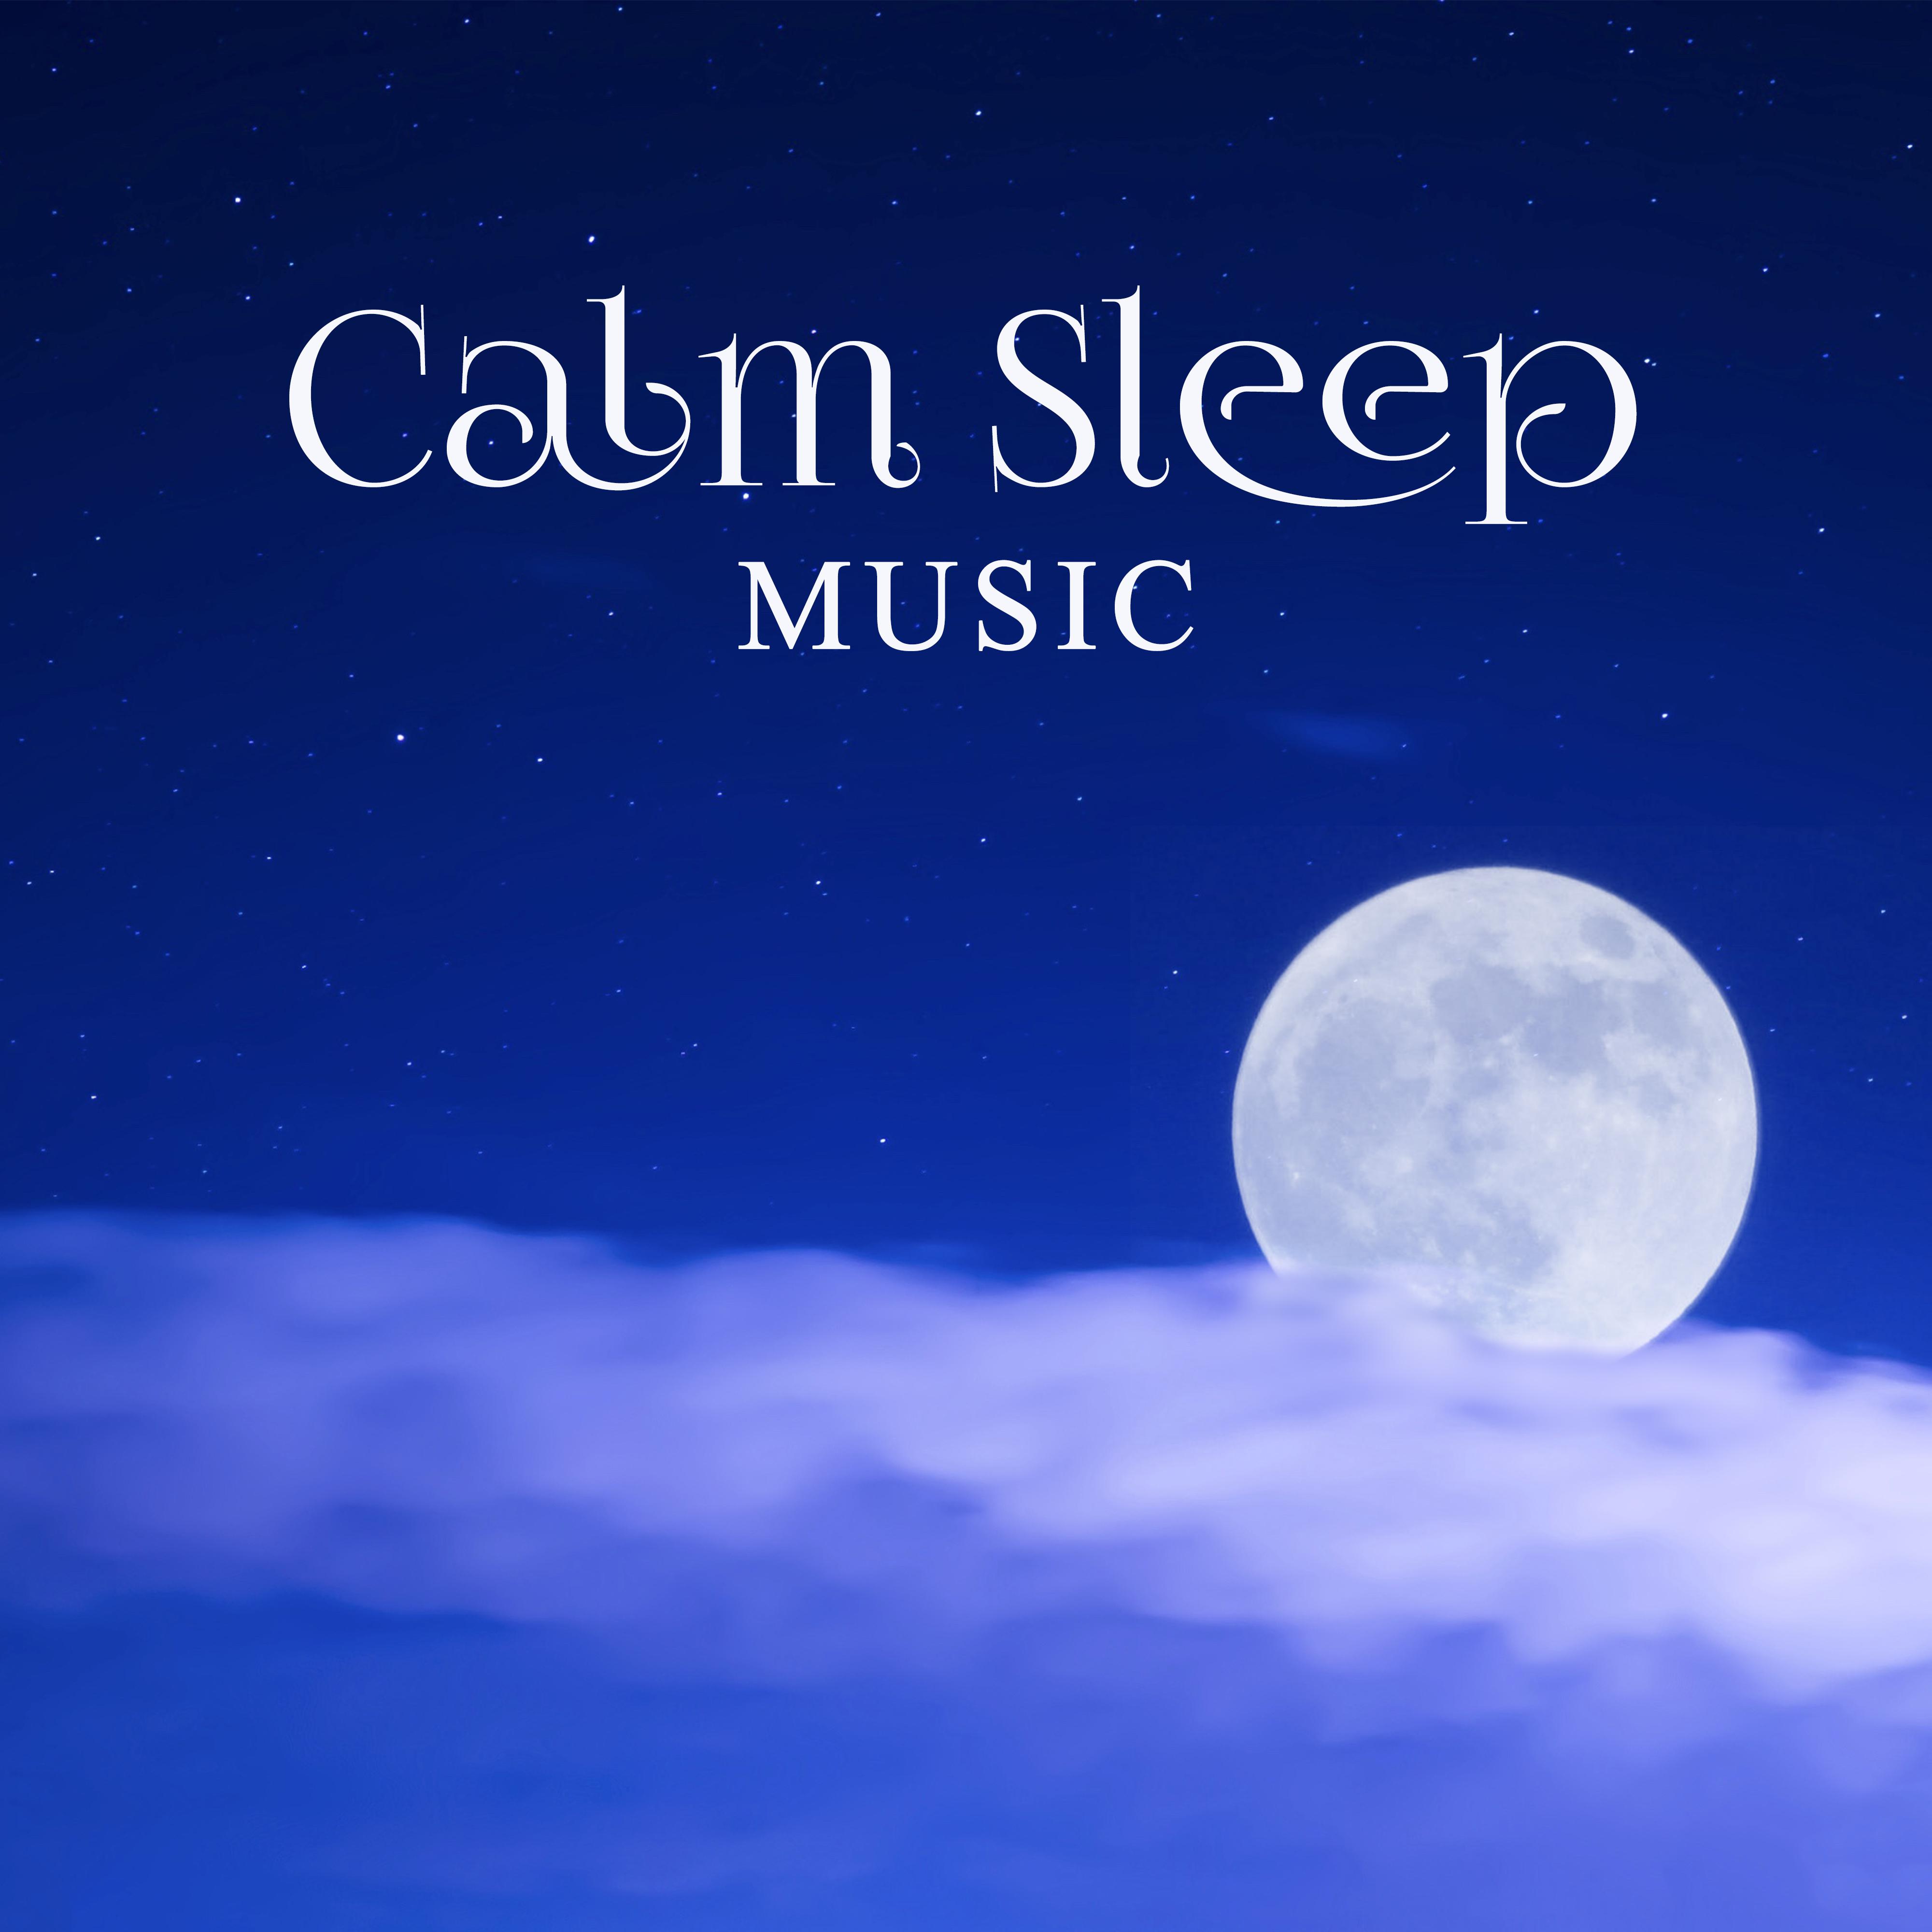 Calm Sleep Music  Relaxing Music for Sleep, Fall Asleep, Peaceful New Age, Deep Sleep, Healing Sounds of Nature